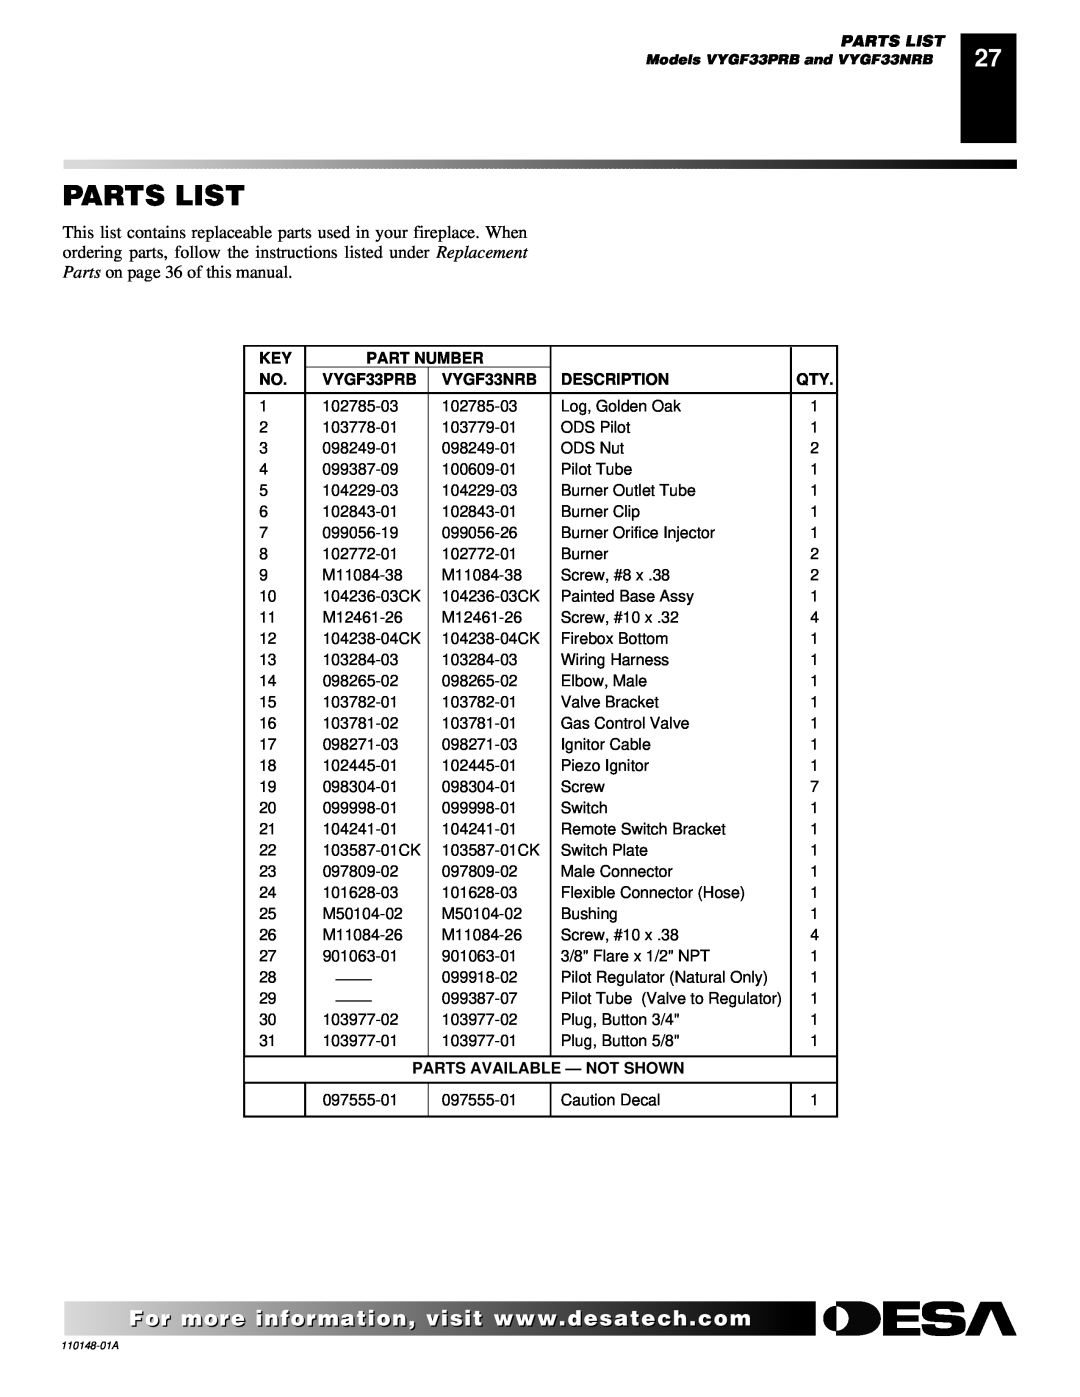 Desa VYGF33NRB installation manual Parts List, Part Number, VYGF33PRB, Description, Parts Available - Not Shown 